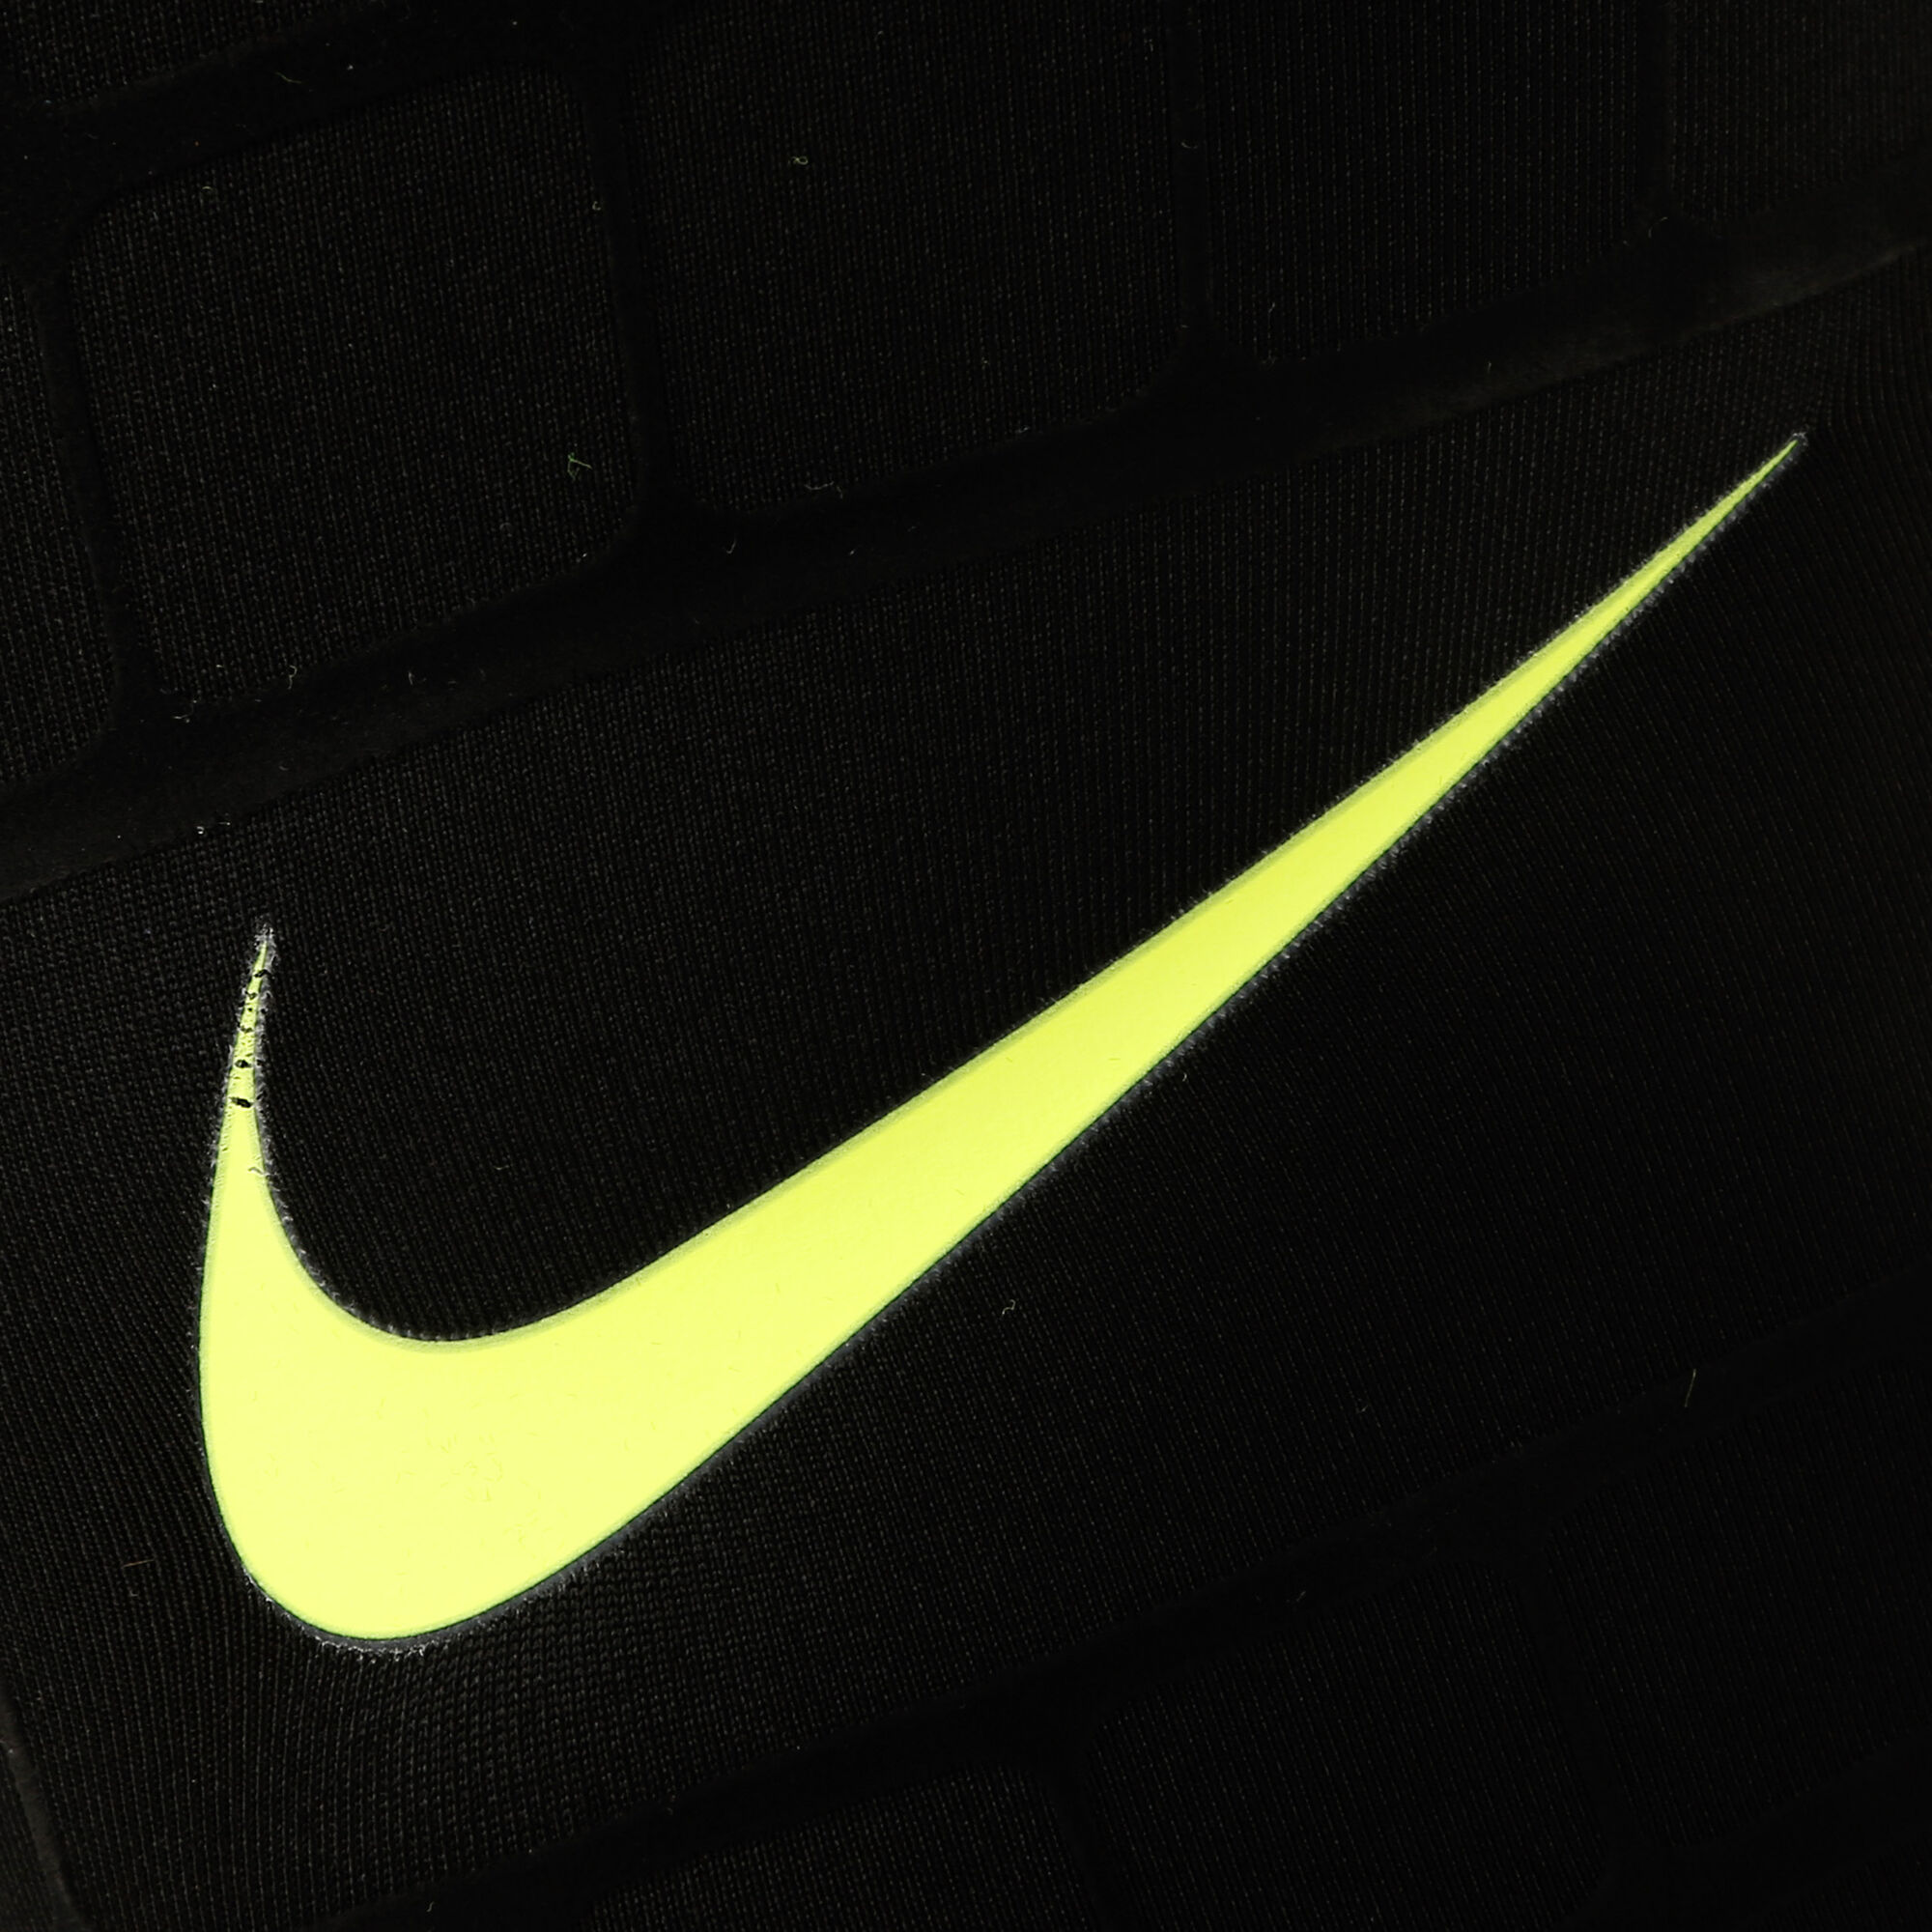 Buy Nike Pro Dry Fit Combat Recovery Hyper Running Pants Men Black